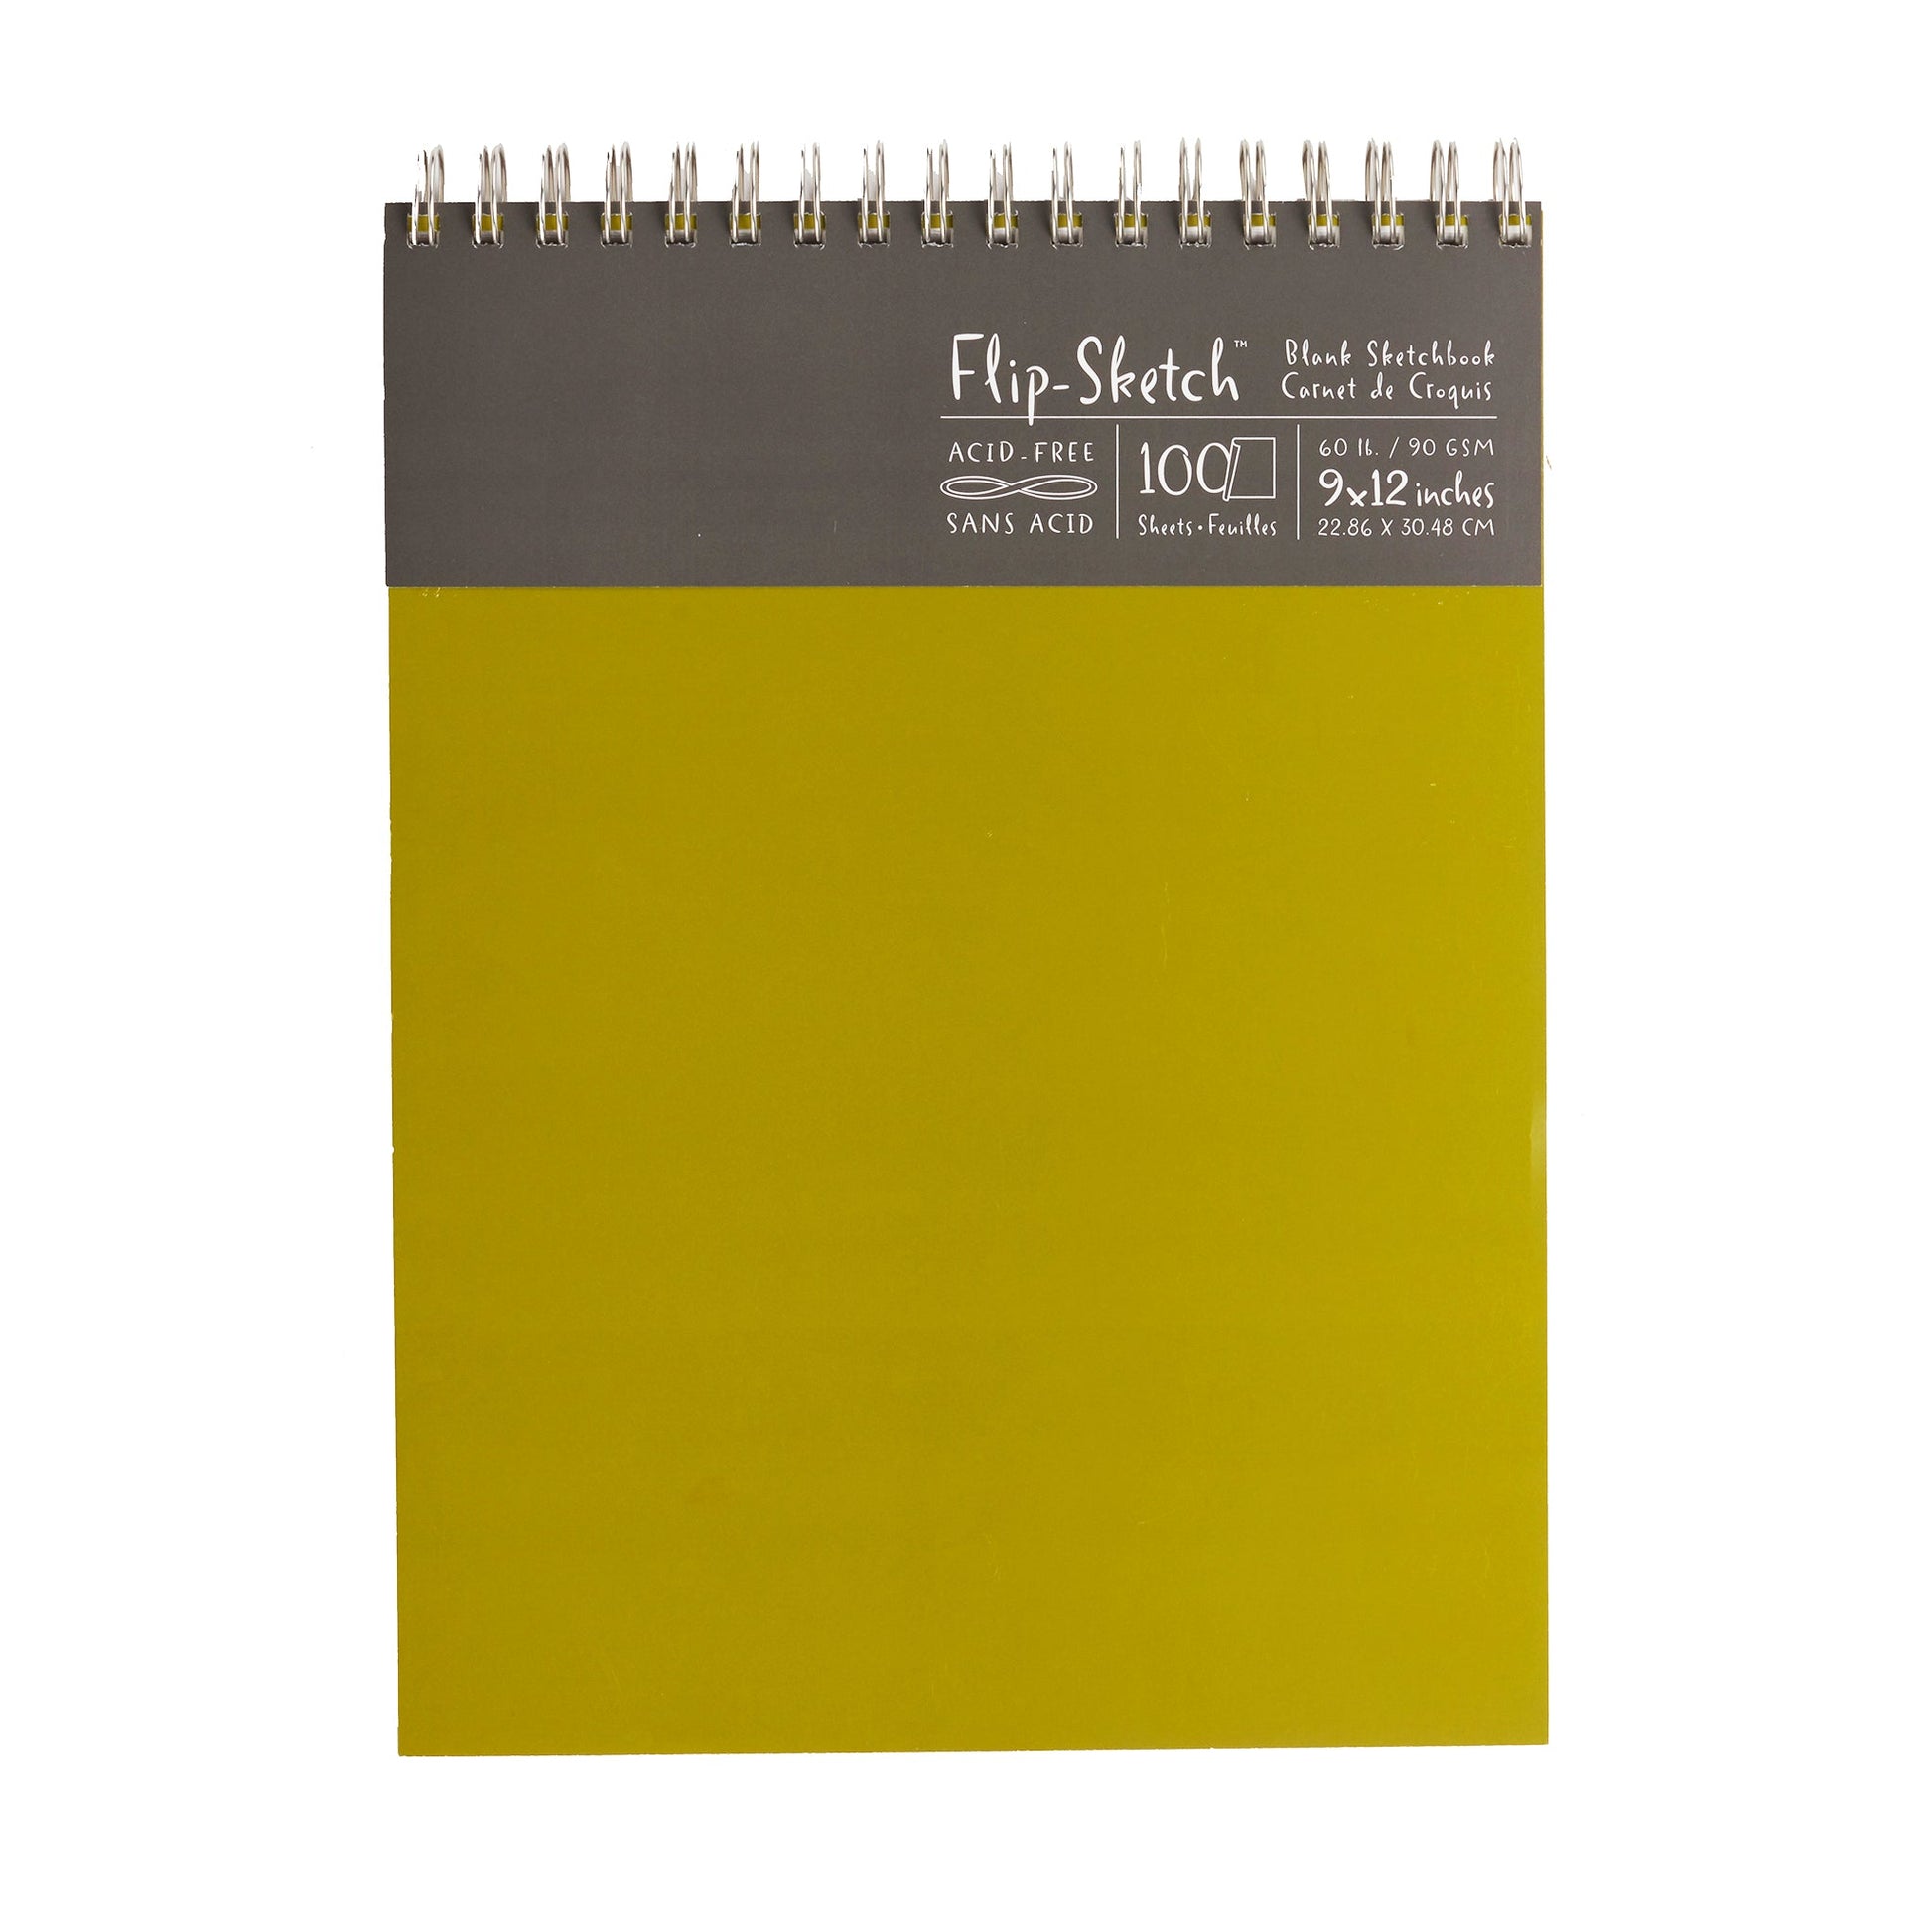 Flip-Sketch Sketch Books  Oil and Cotton – Oil & Cotton